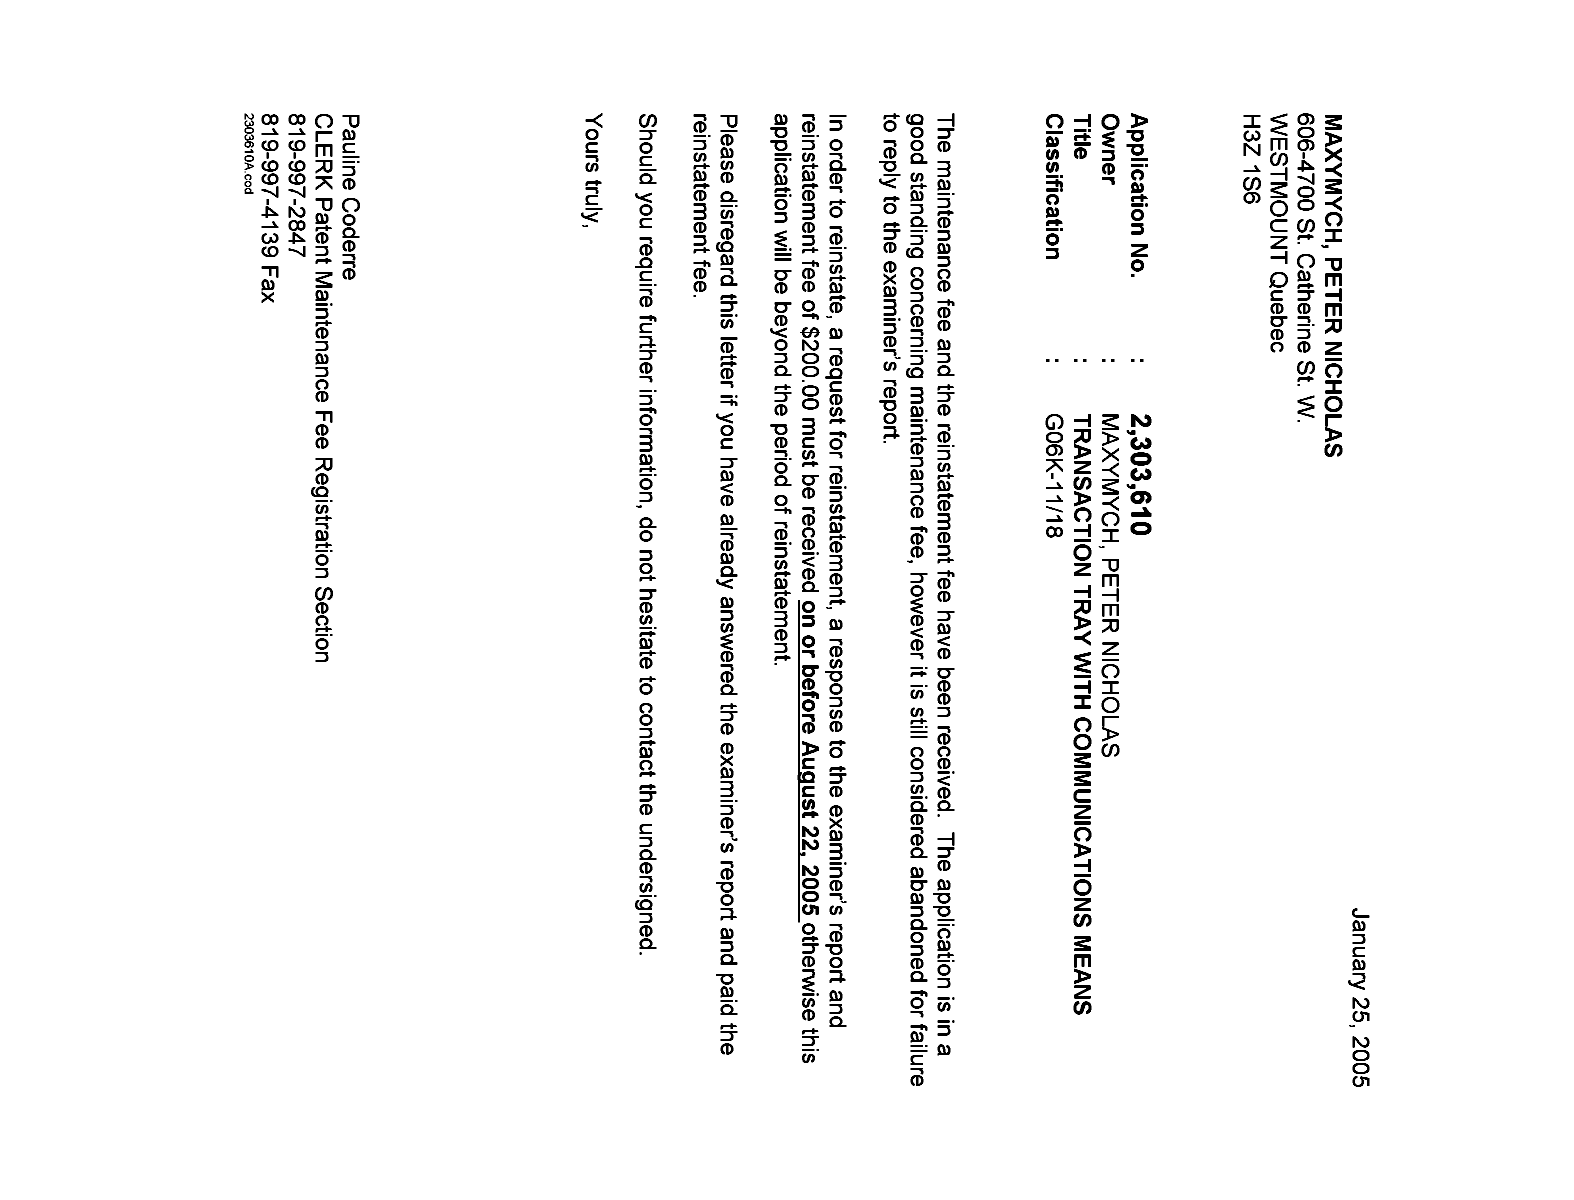 Canadian Patent Document 2303610. Correspondence 20050125. Image 1 of 1